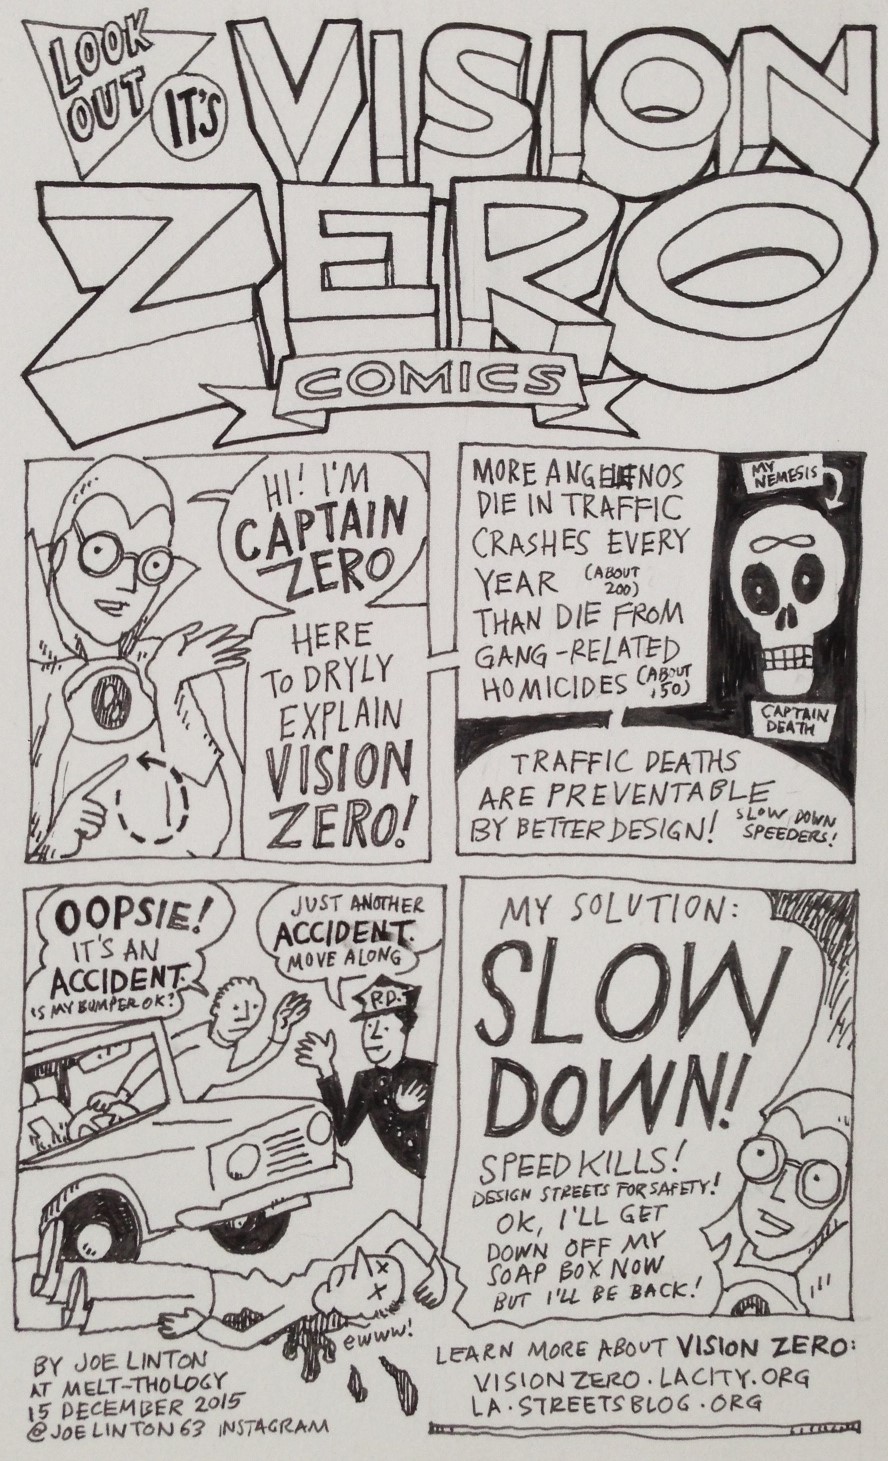 Vision Zero Comics from Melt-Thology #16. Art by Joe Linton